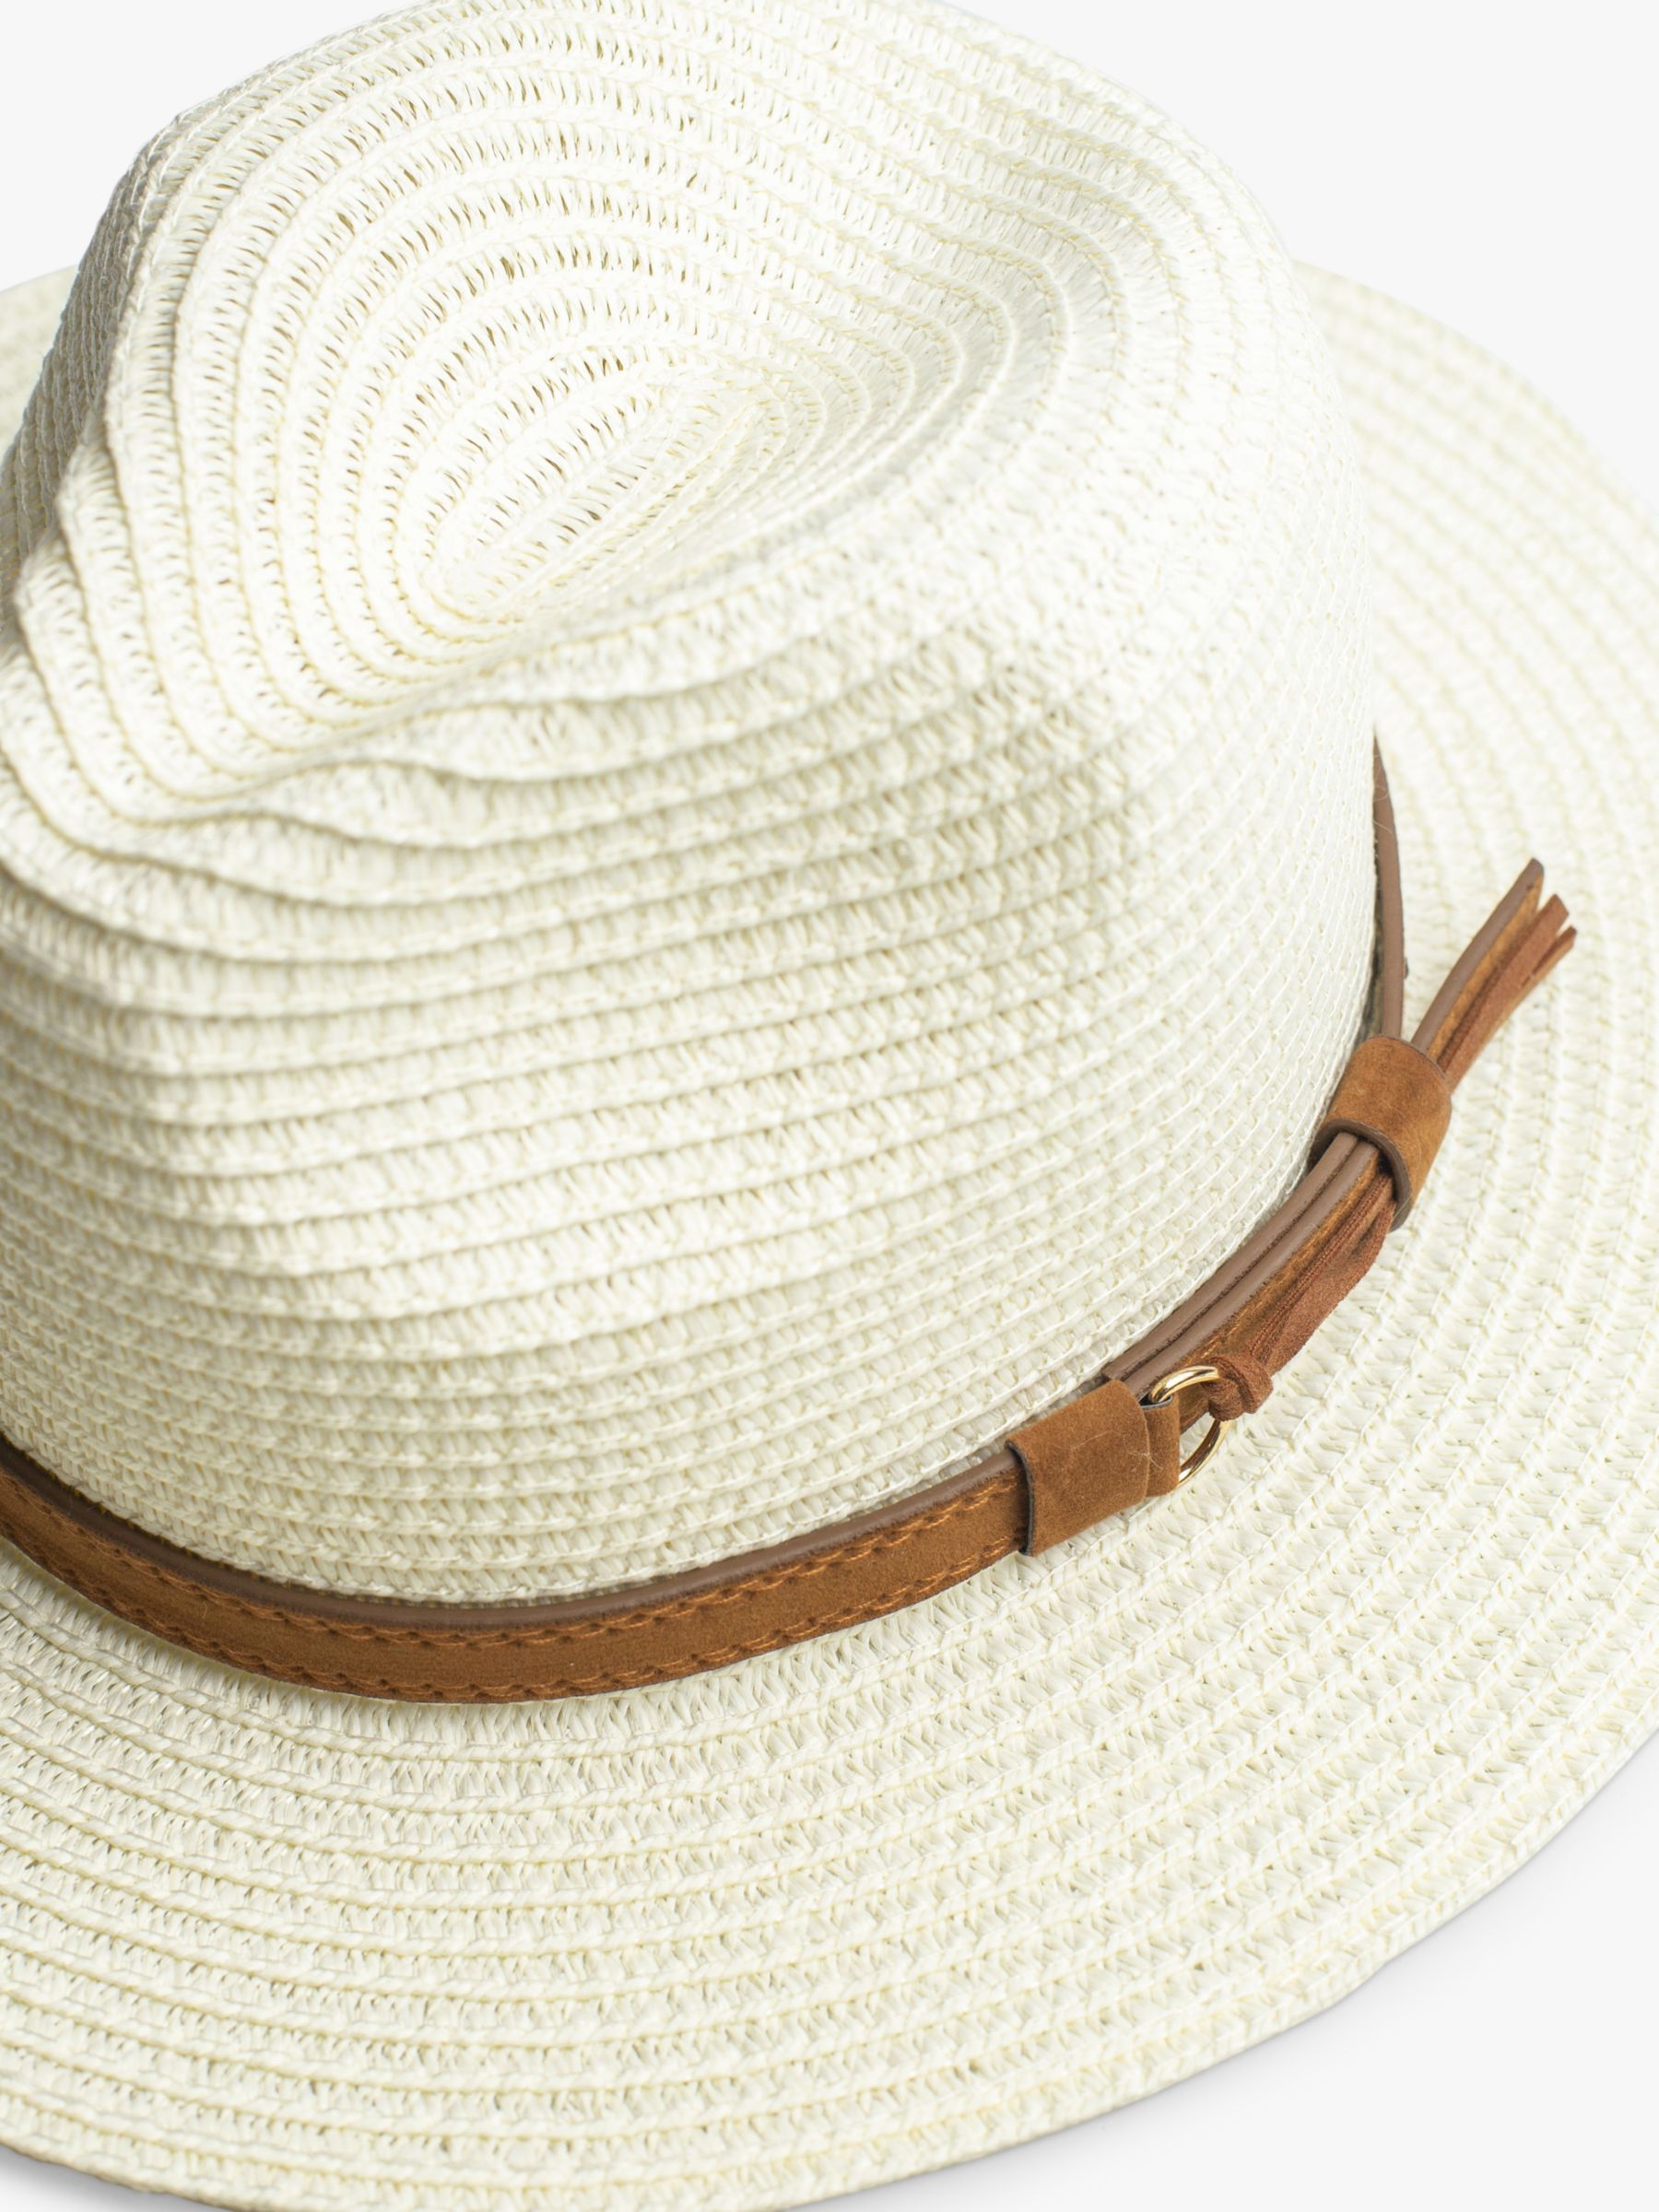 Bloom & Bay Adva Straw Hat, Cream, One Size